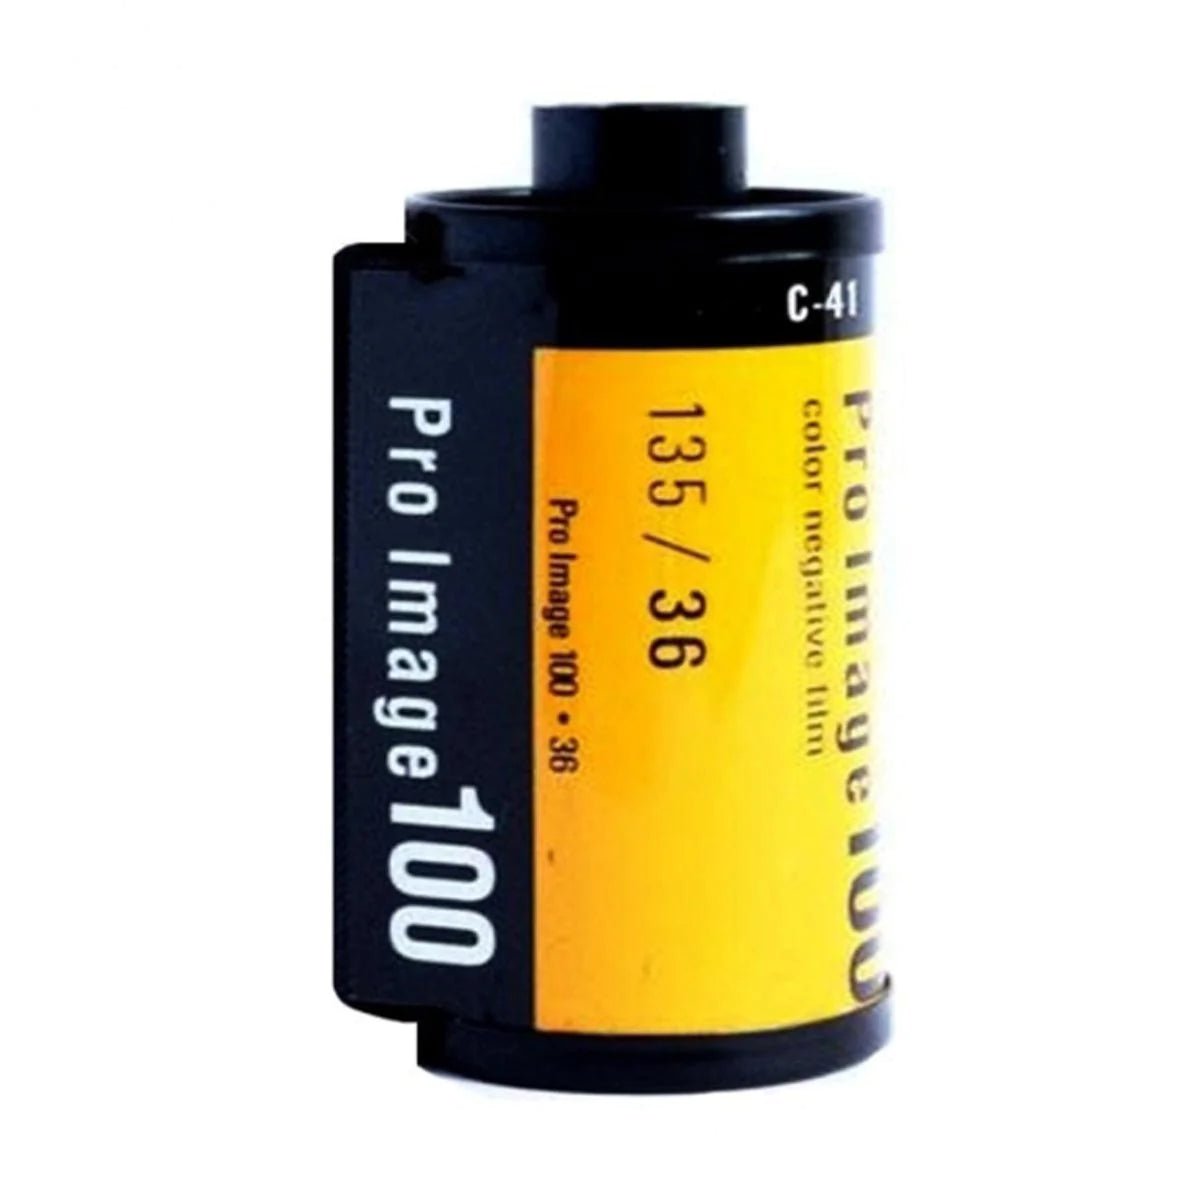 Kodak Professional Gold 200 Color Negative Film (120 Roll Film